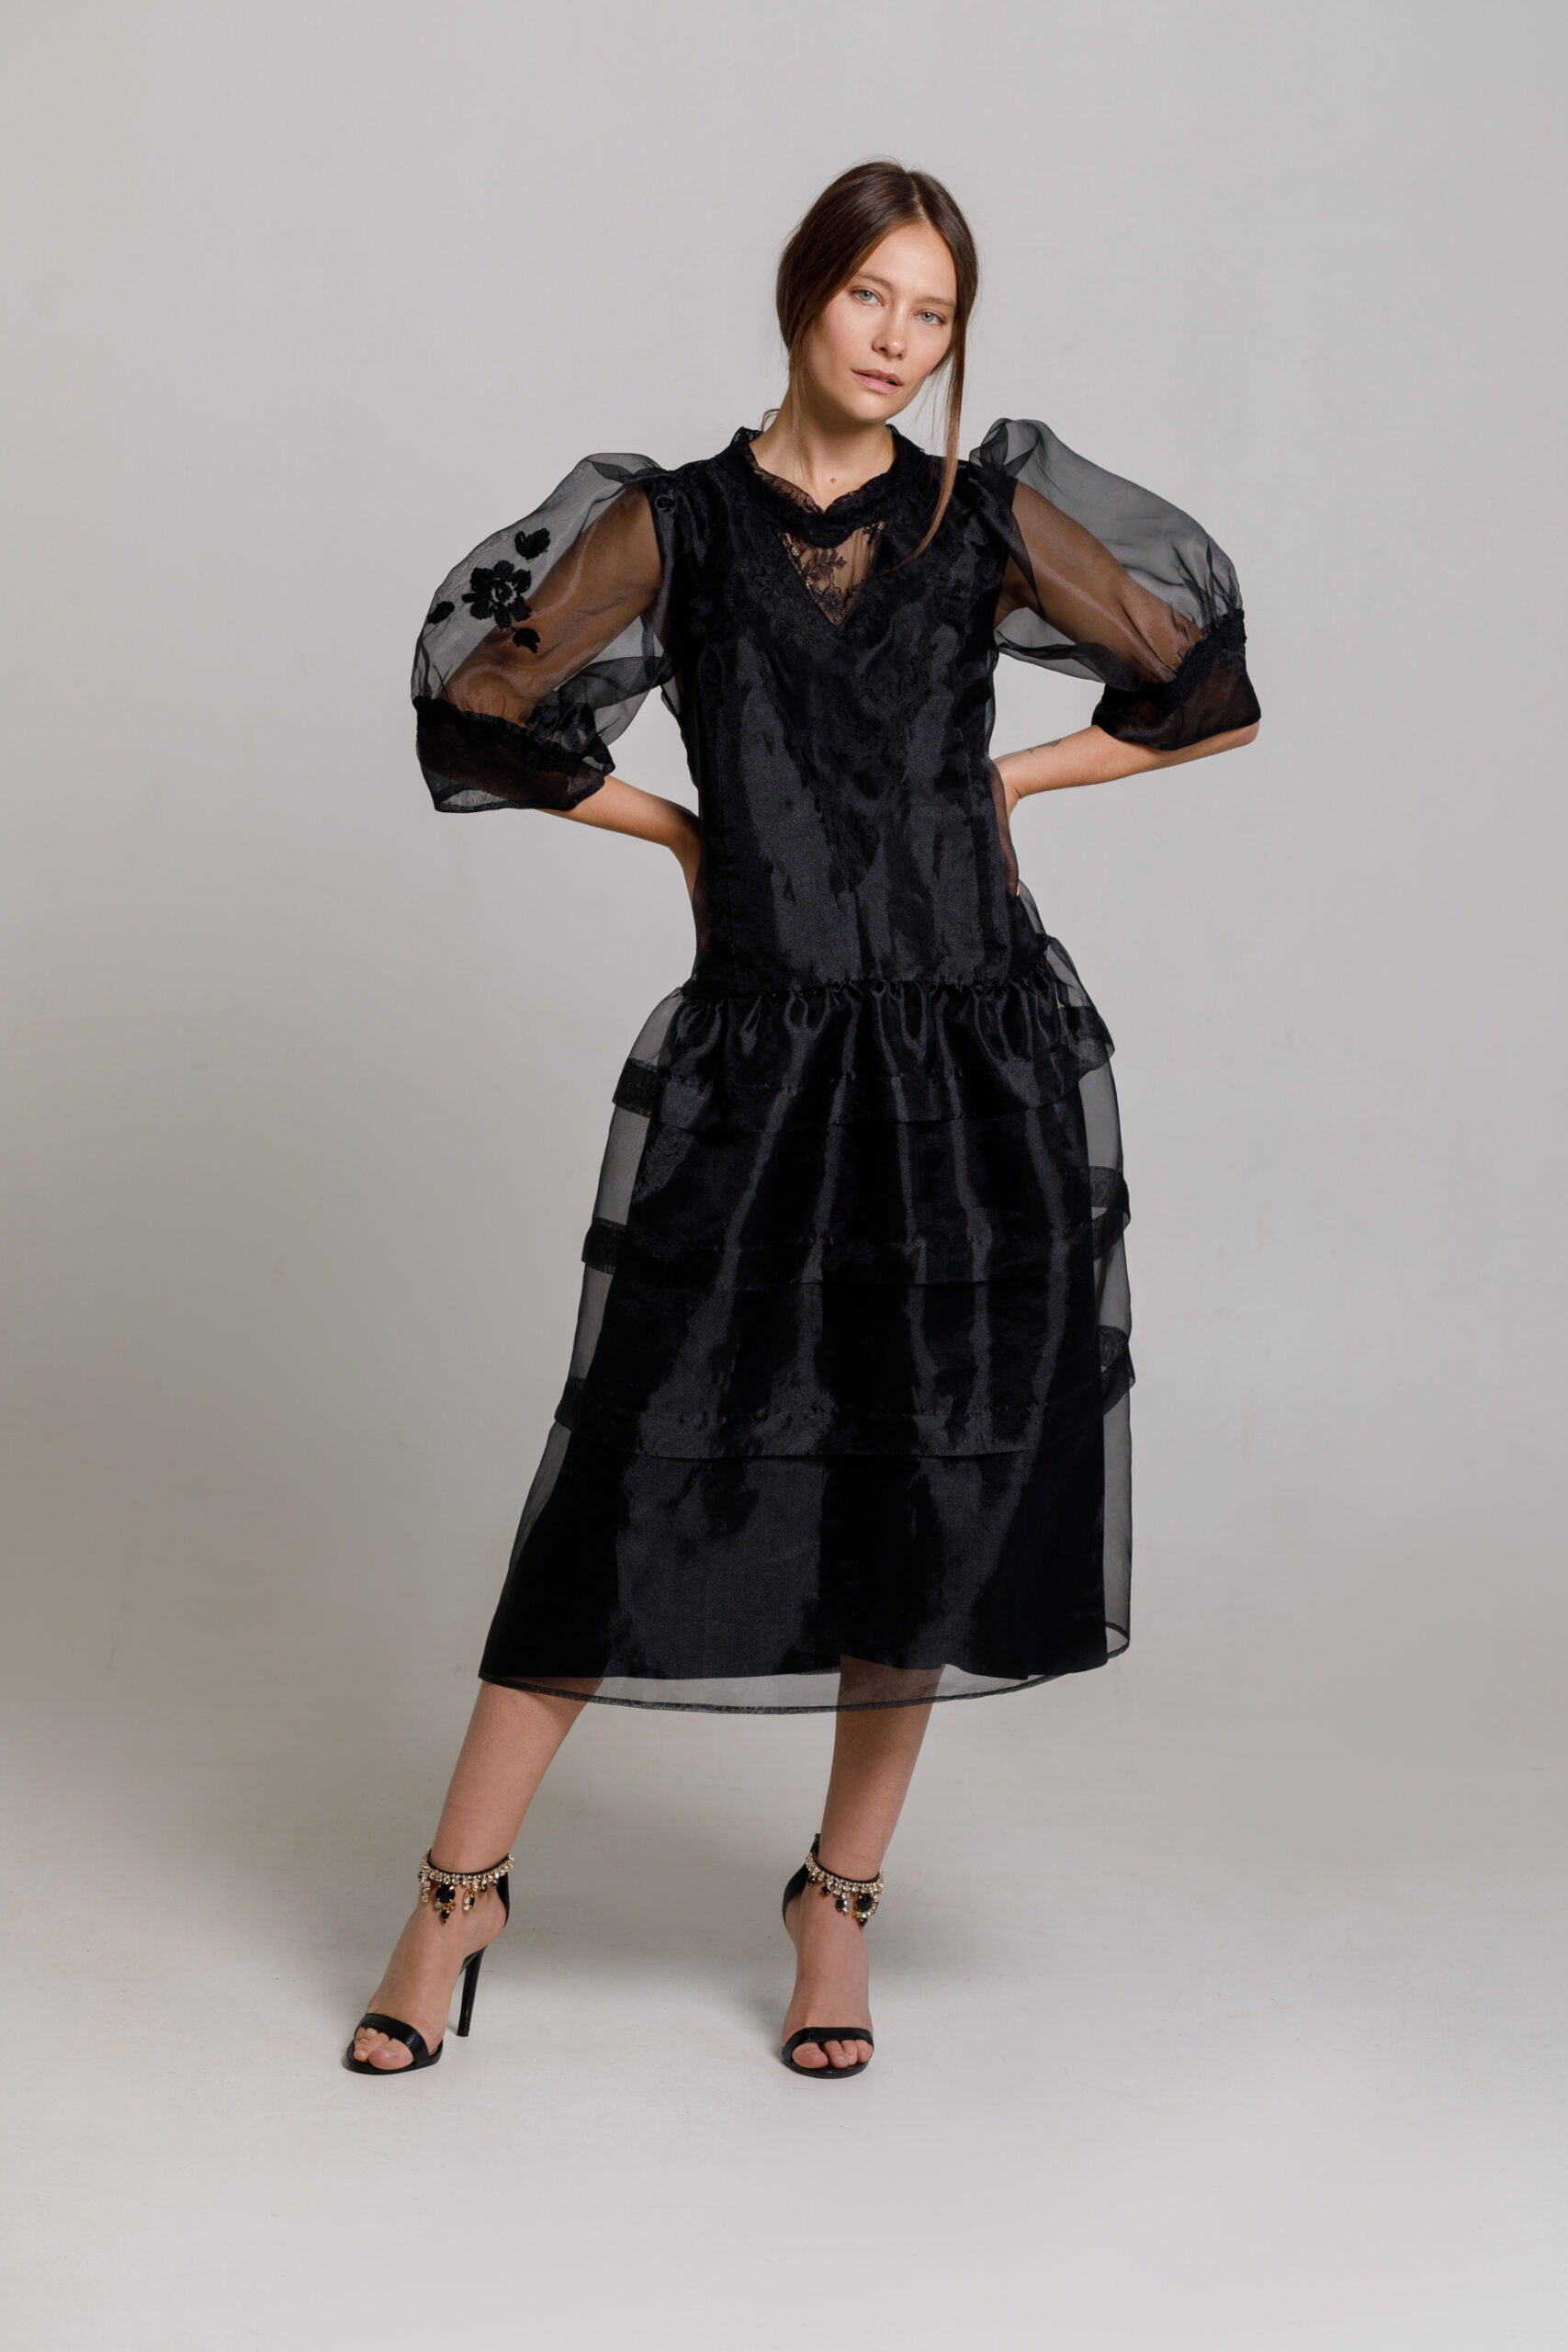 DRESS DAVINA elegant black organza and lycra. Natural fabrics, original design, handmade embroidery